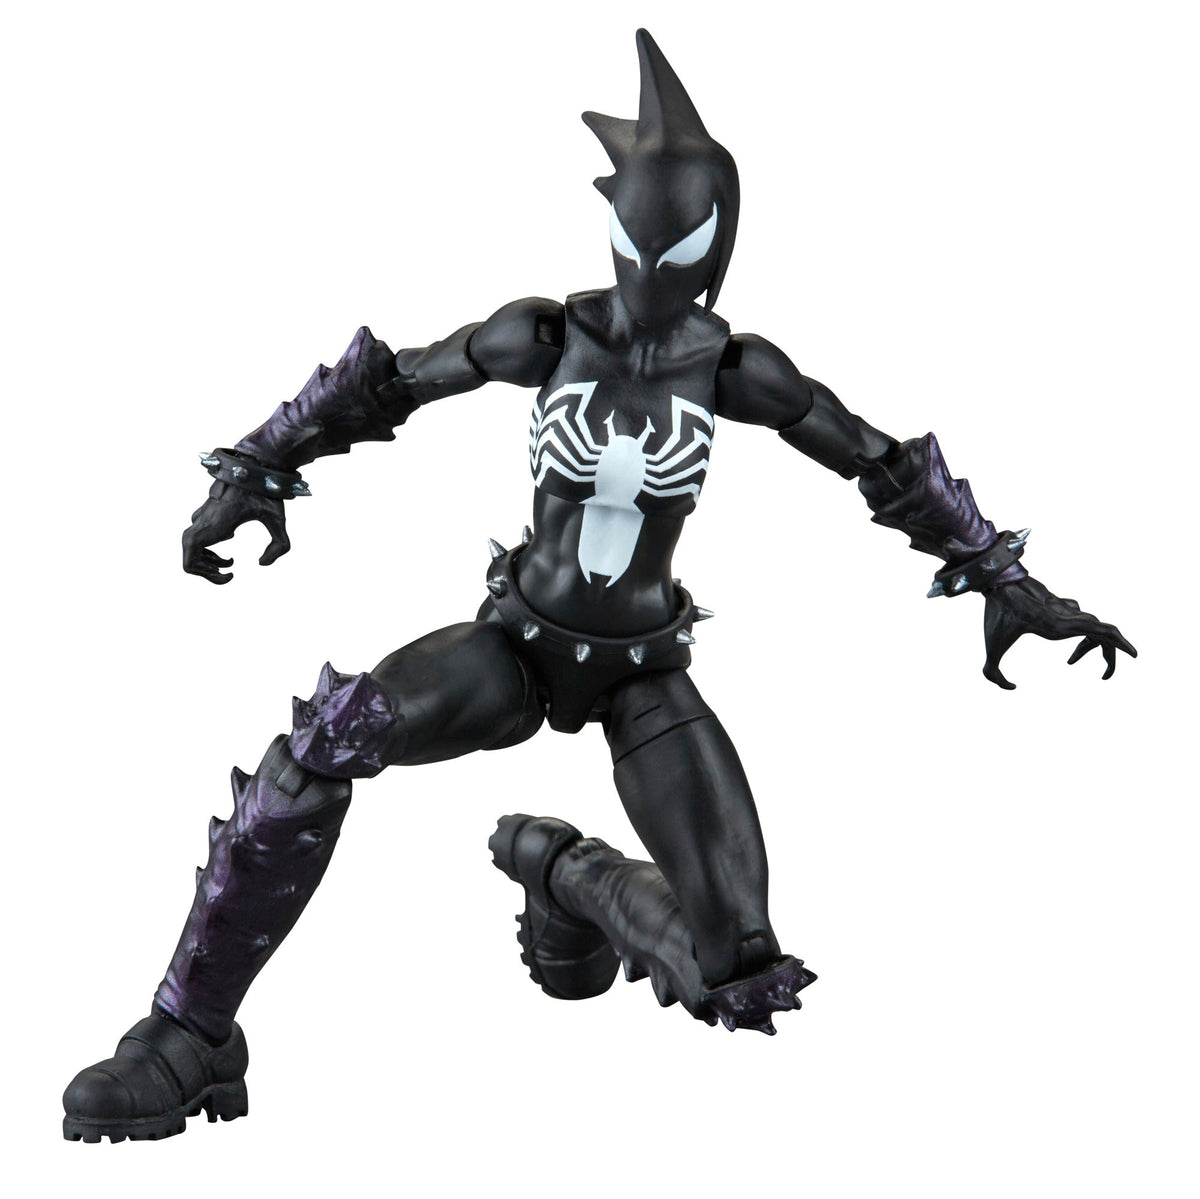 Marvel Hasbro Legends Series Venom 6-inch Collectible Action Figure Venom  Toy, Premium Design and 3 Accessories